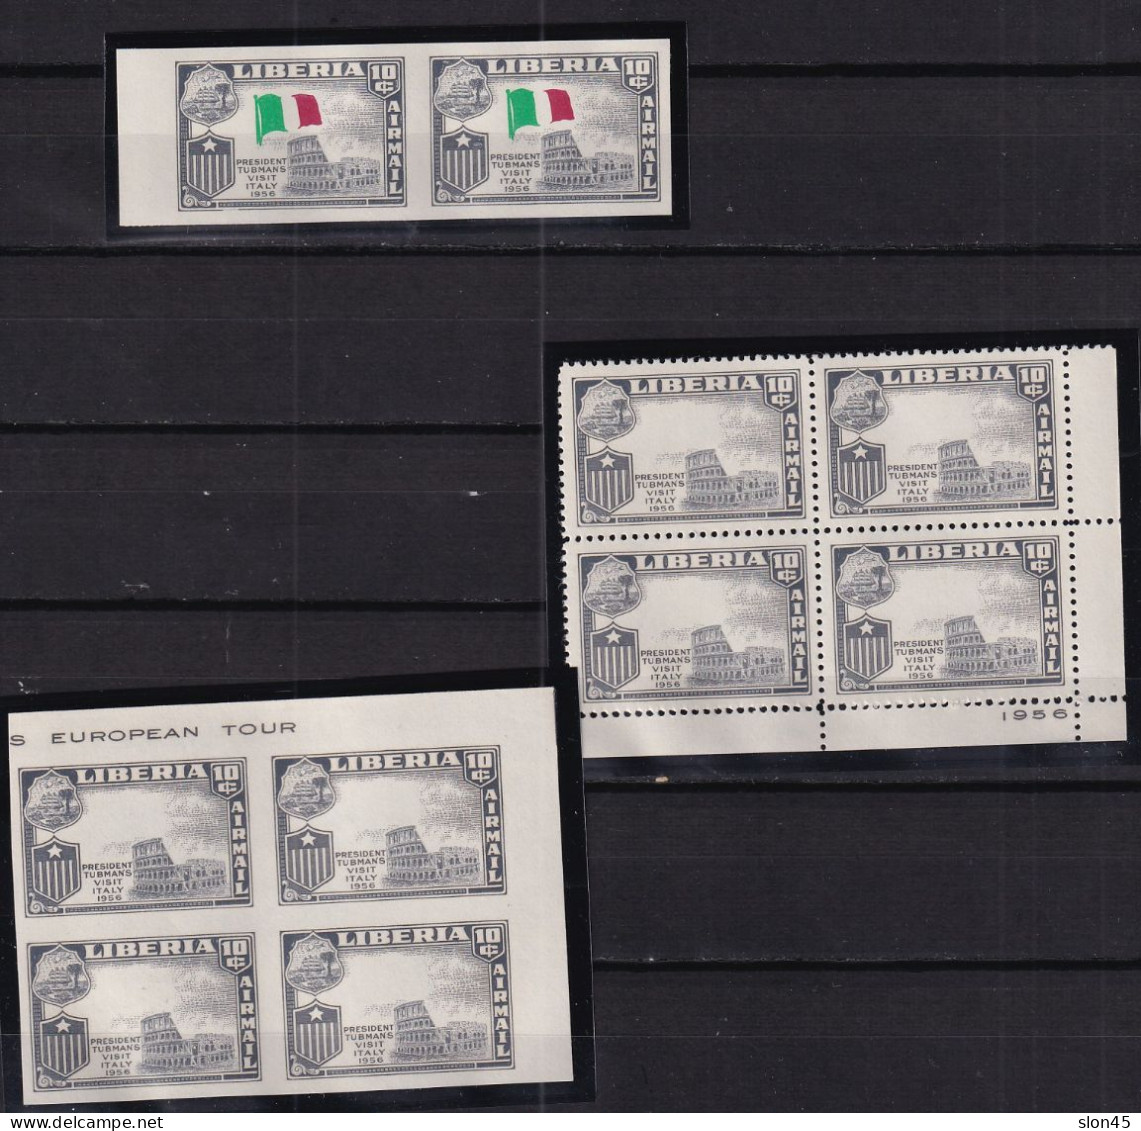 Liberia 1958 Italy Varieties Blocks Of 2 Imperf/perf MNH Flag Missing 16008 - Fouten Op Zegels